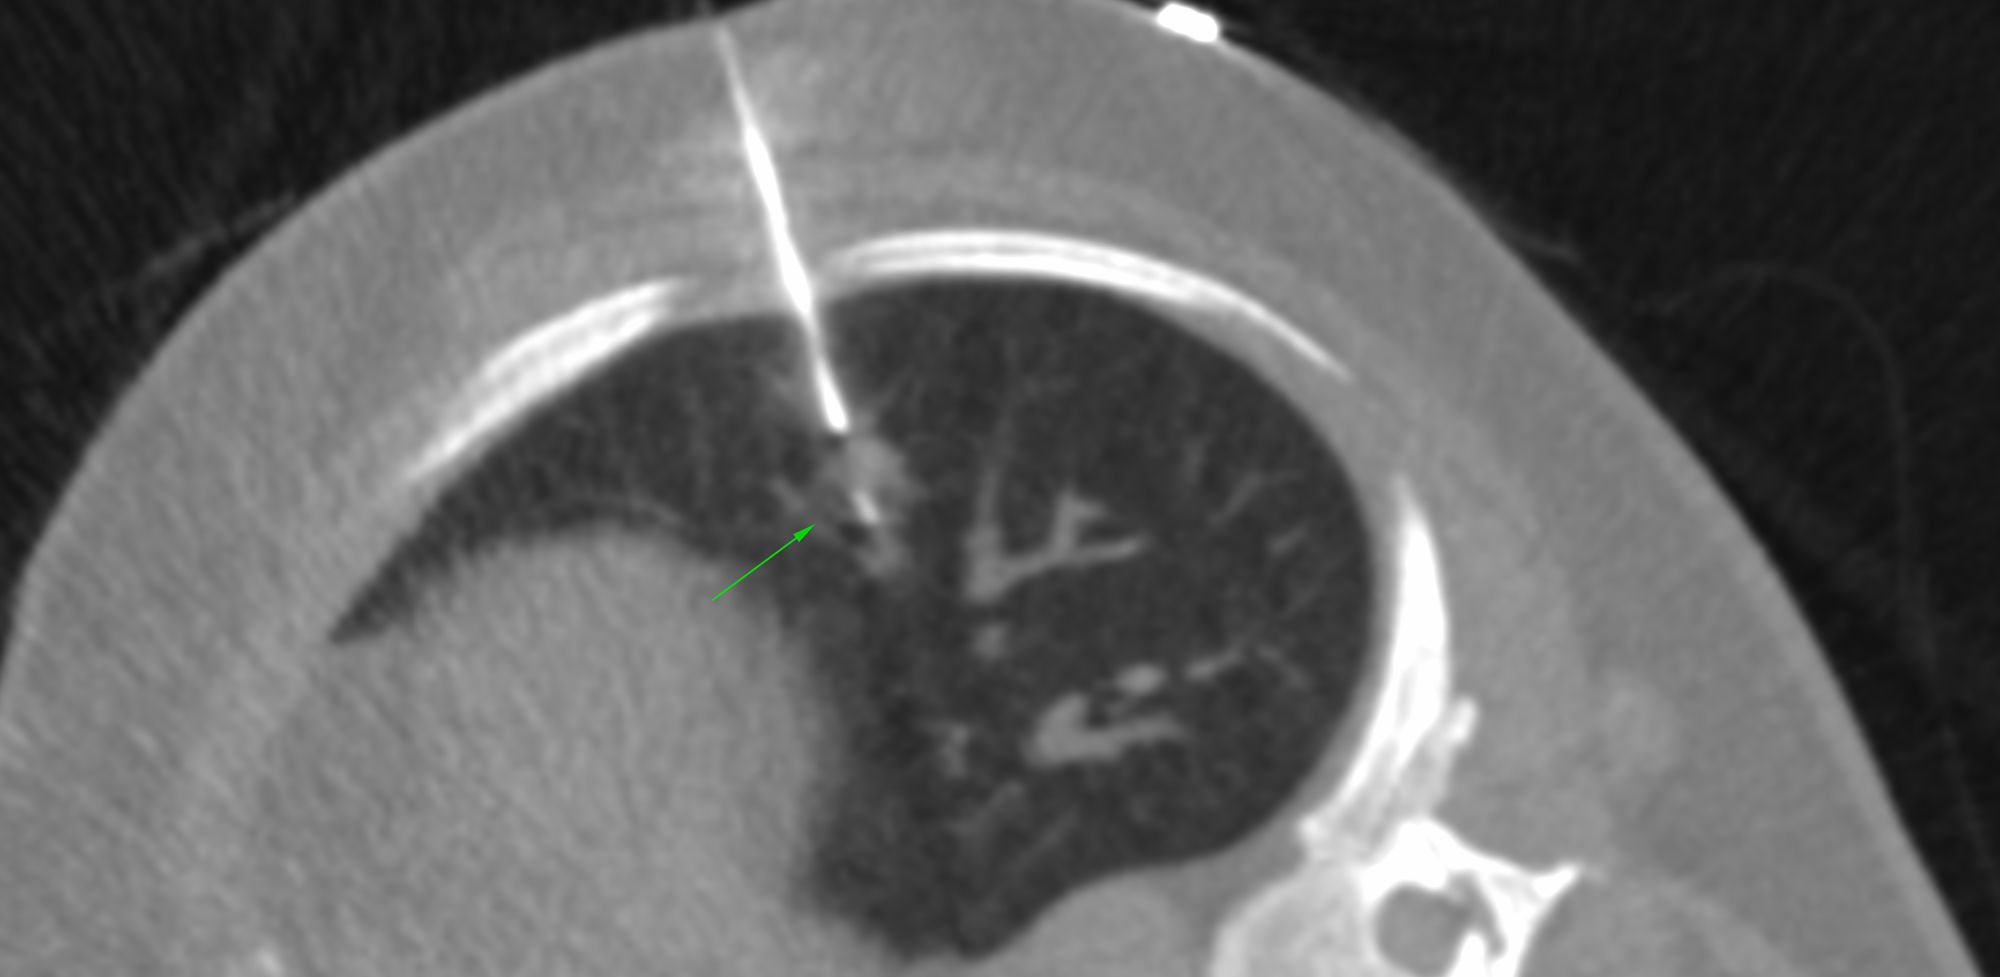 Case 2: Small lung nodule - 6-10 mm (7.8 mm)